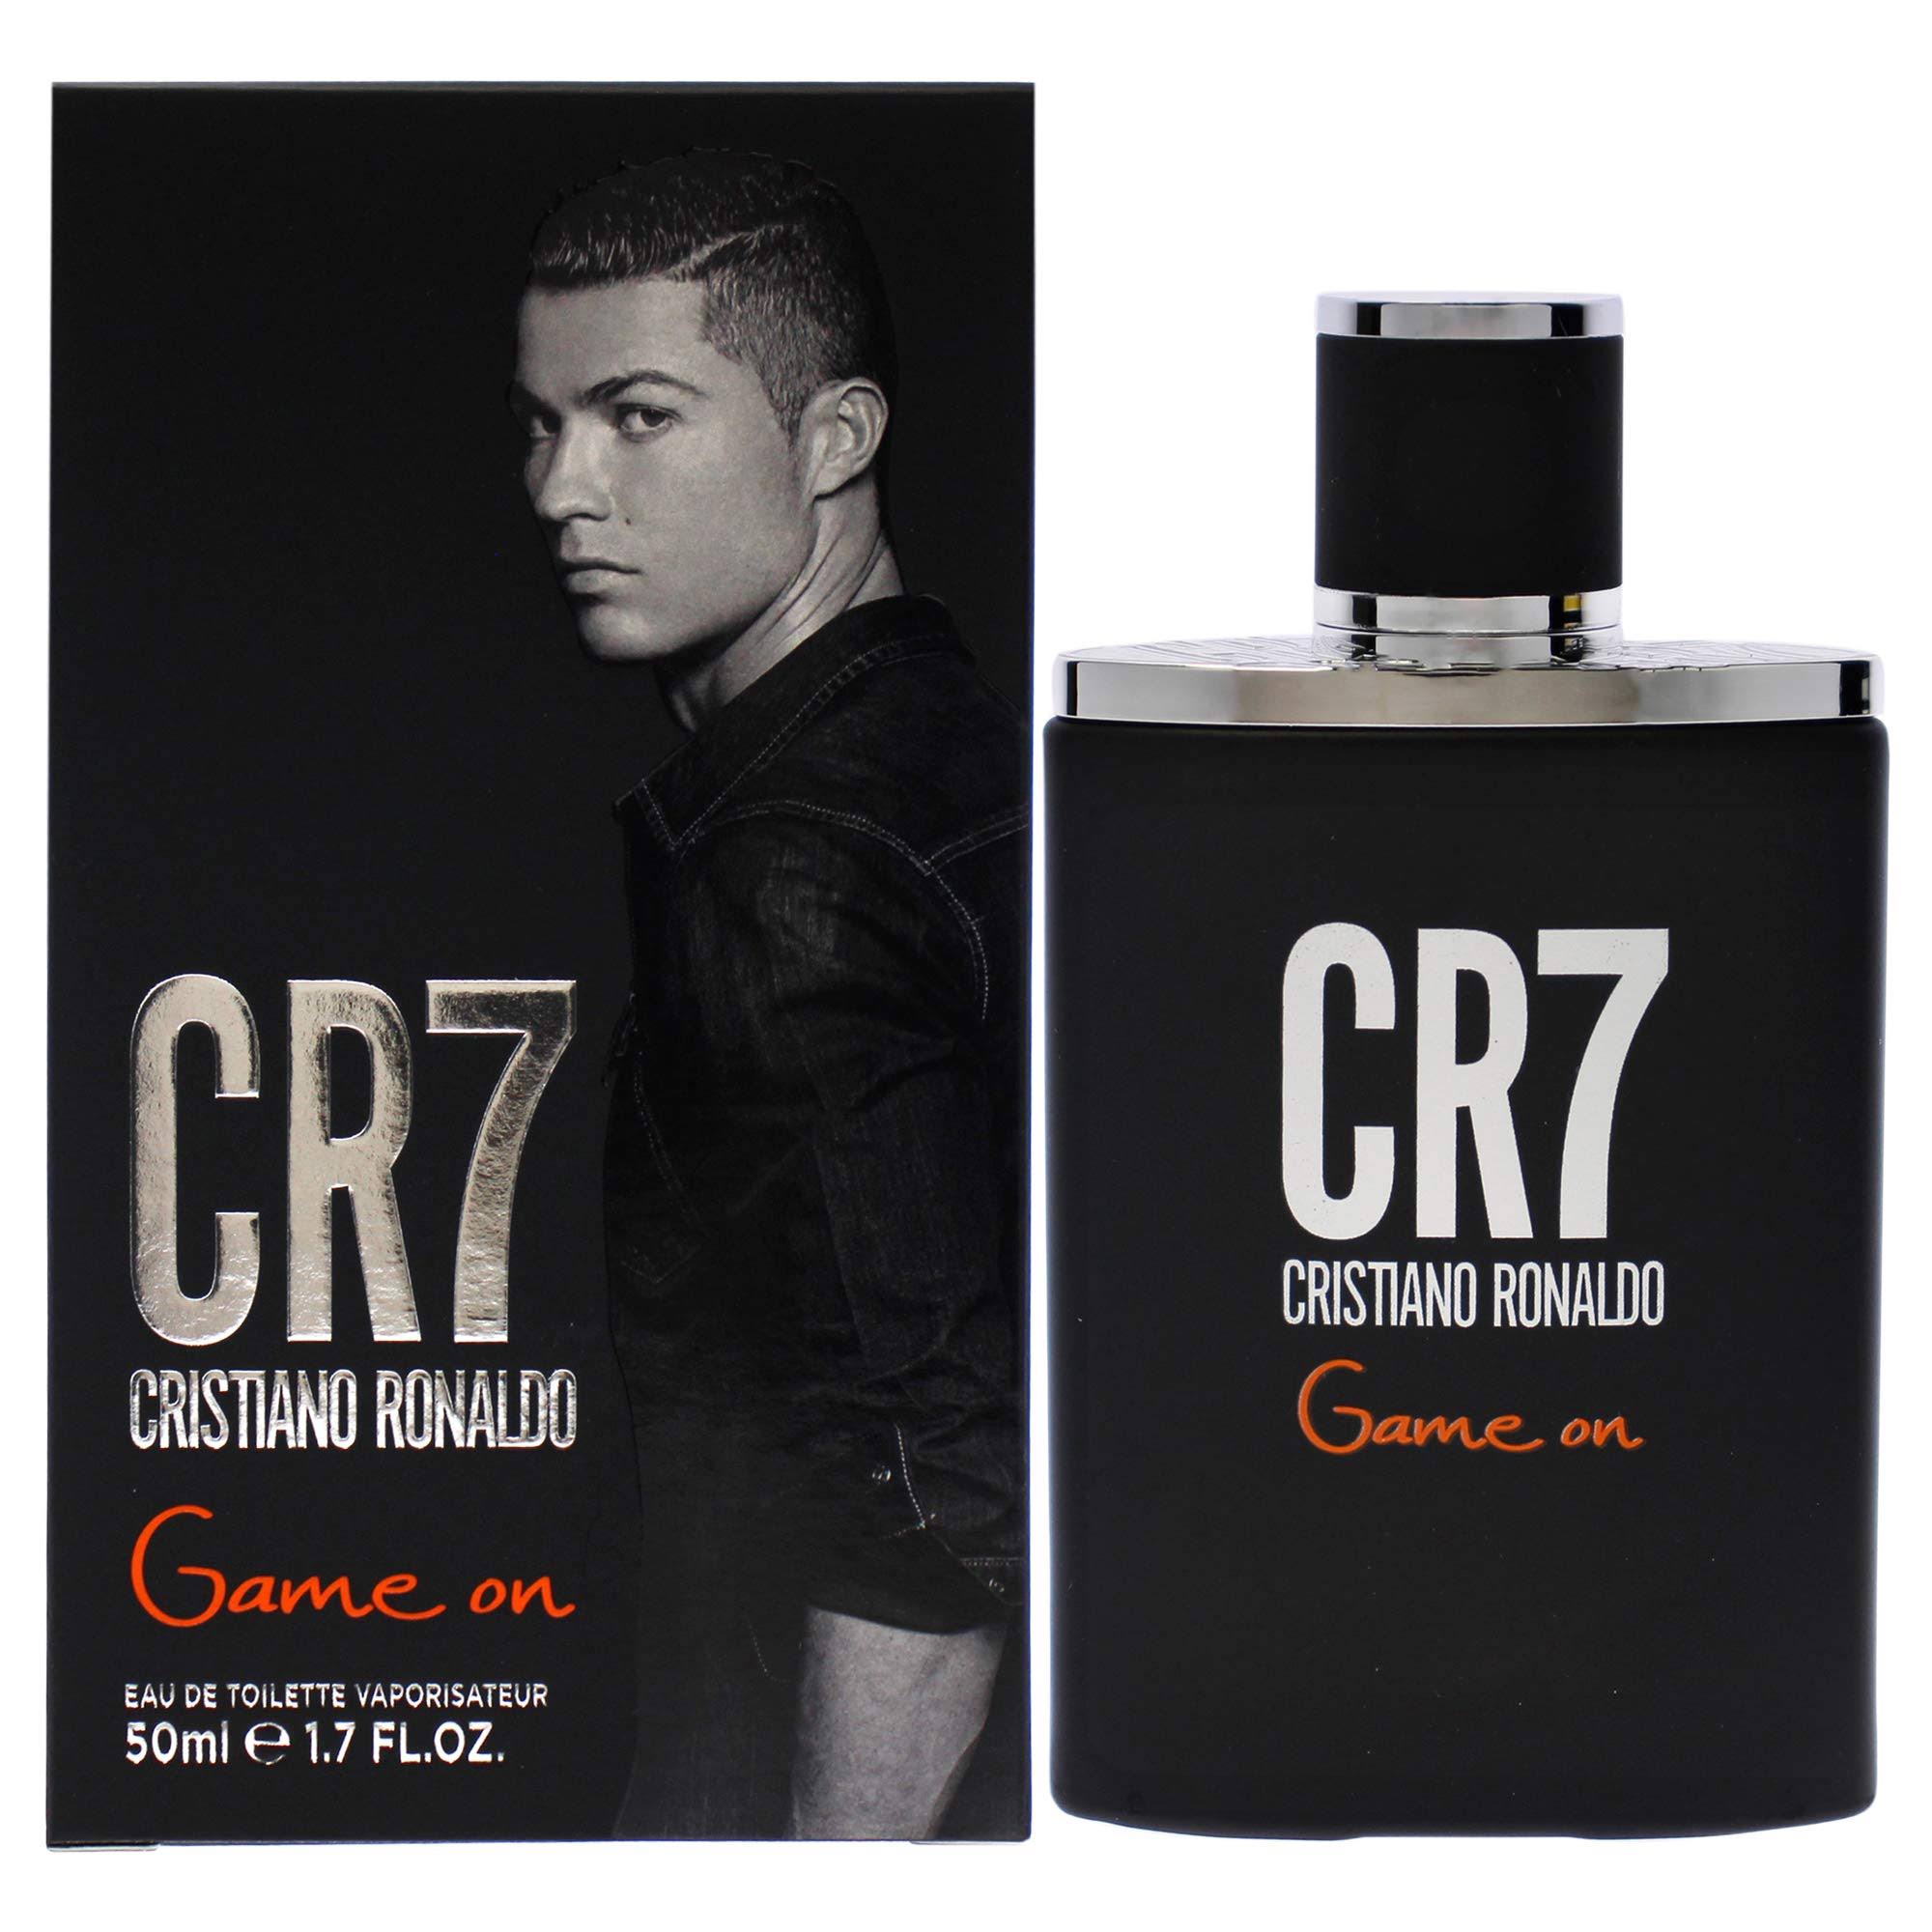 CR7 Game on by Cristiano Ronaldo, 1.7 oz Eau de Toilette Spray for Men